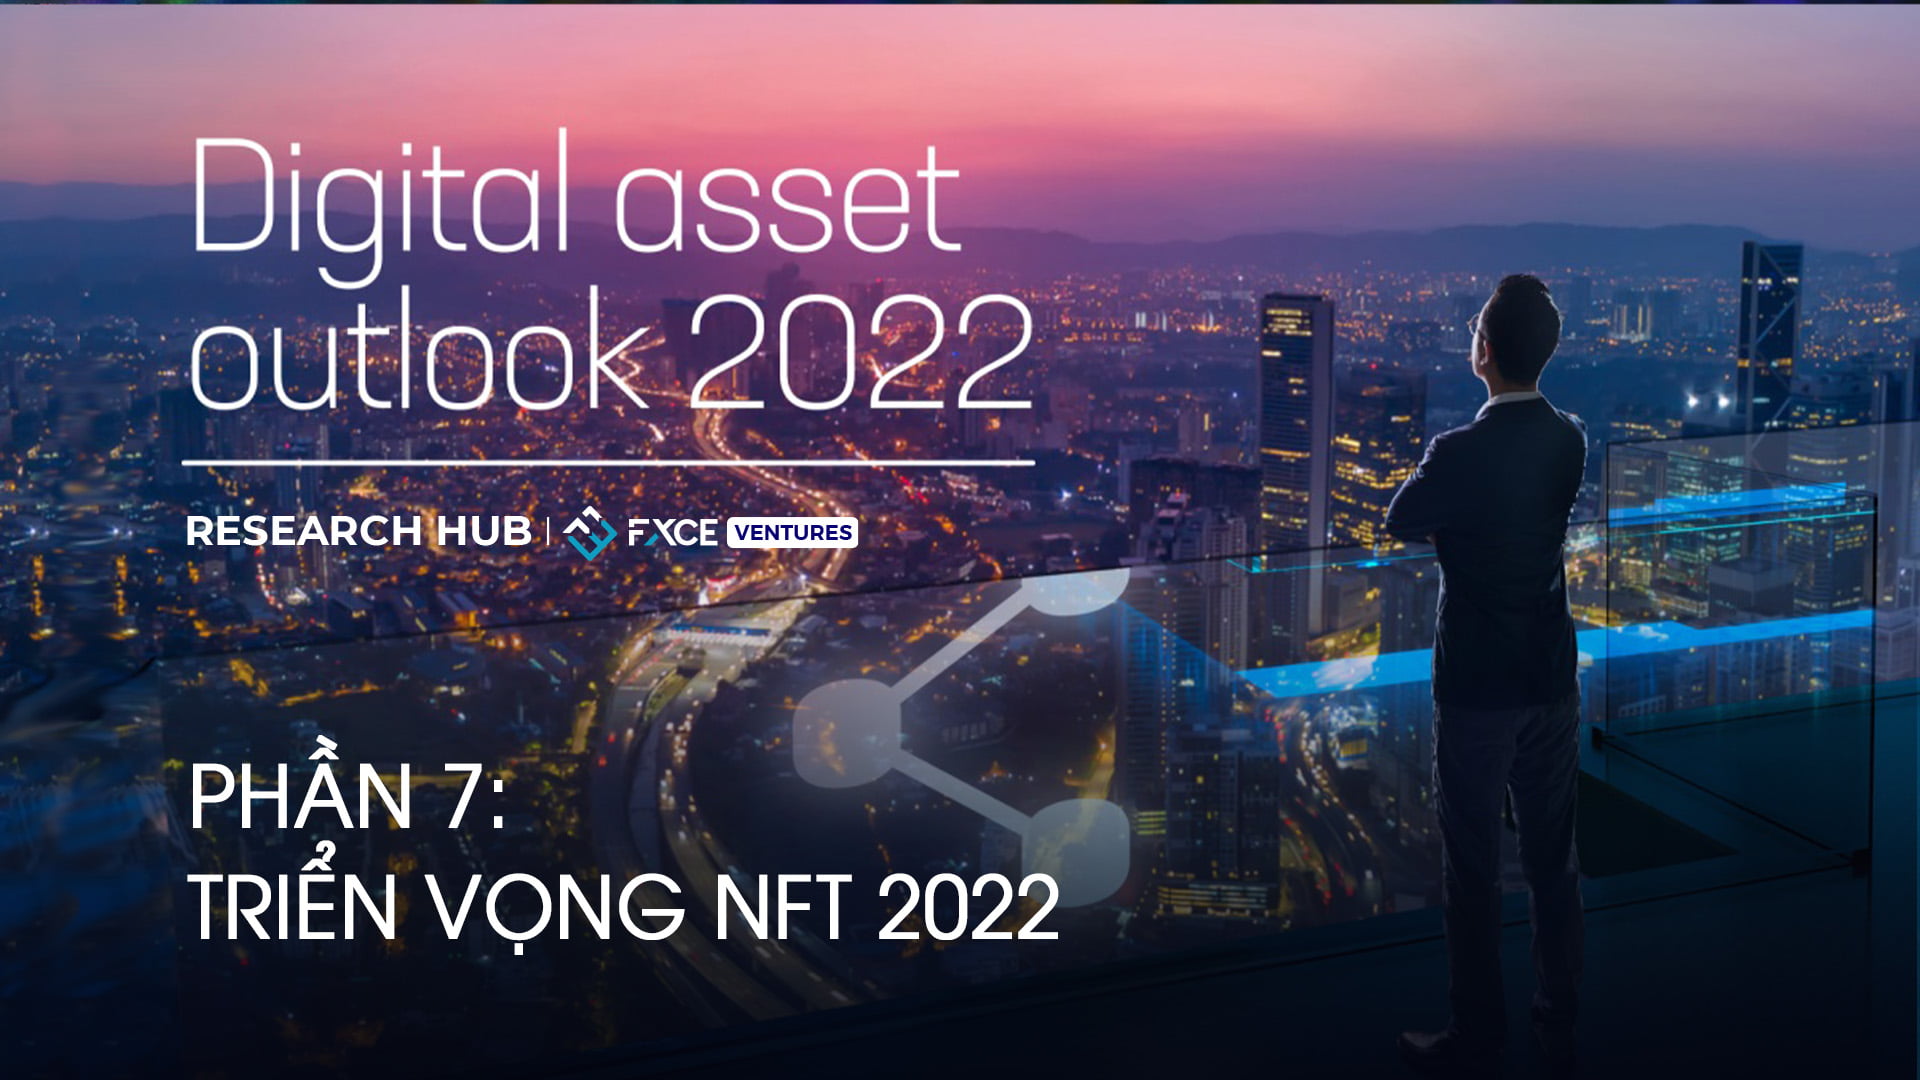 Digital Asset Outlook (P7) - Triển vọng NFT 2022